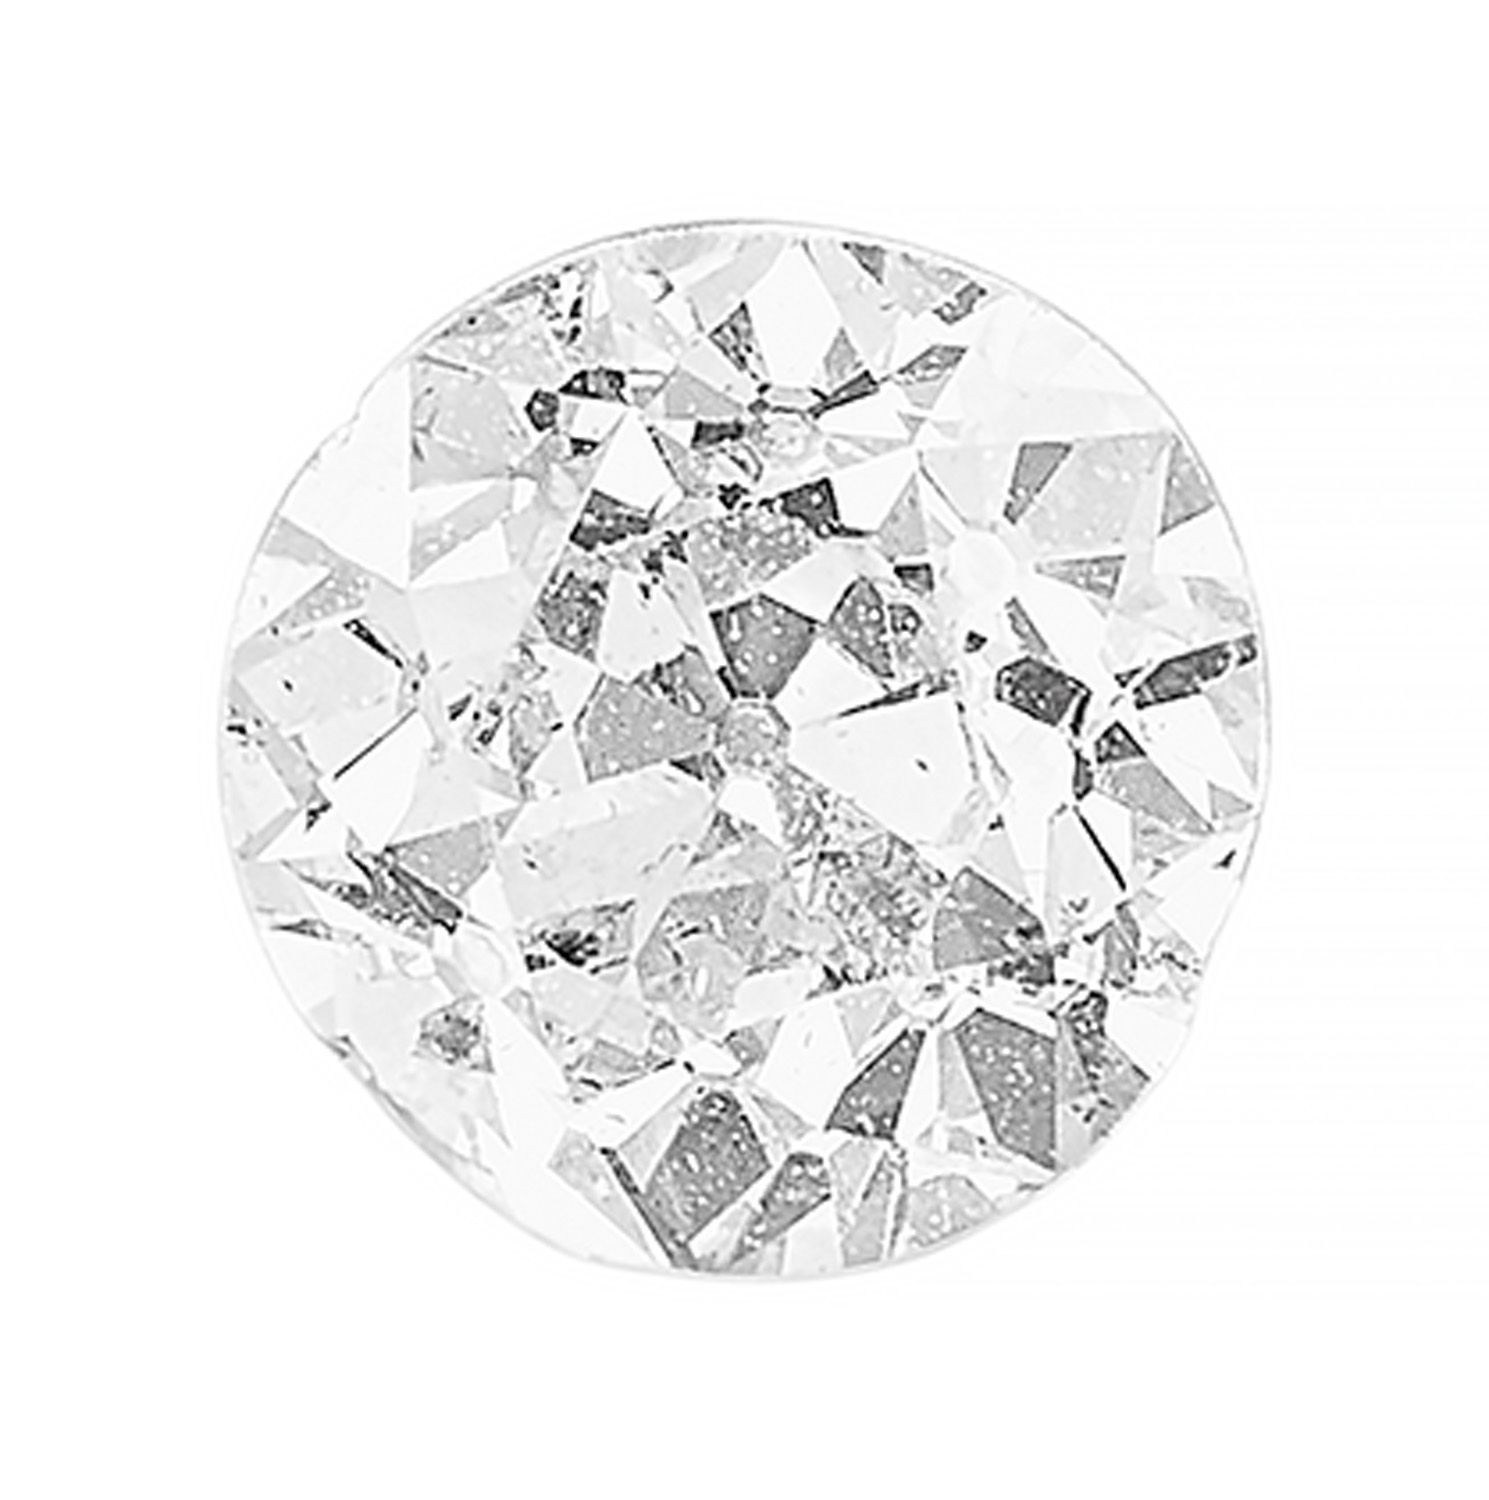 DIAMANT SUR PAPIER Loose european cut diamond weighing 0,65 carat of assumed I/J&hellip;